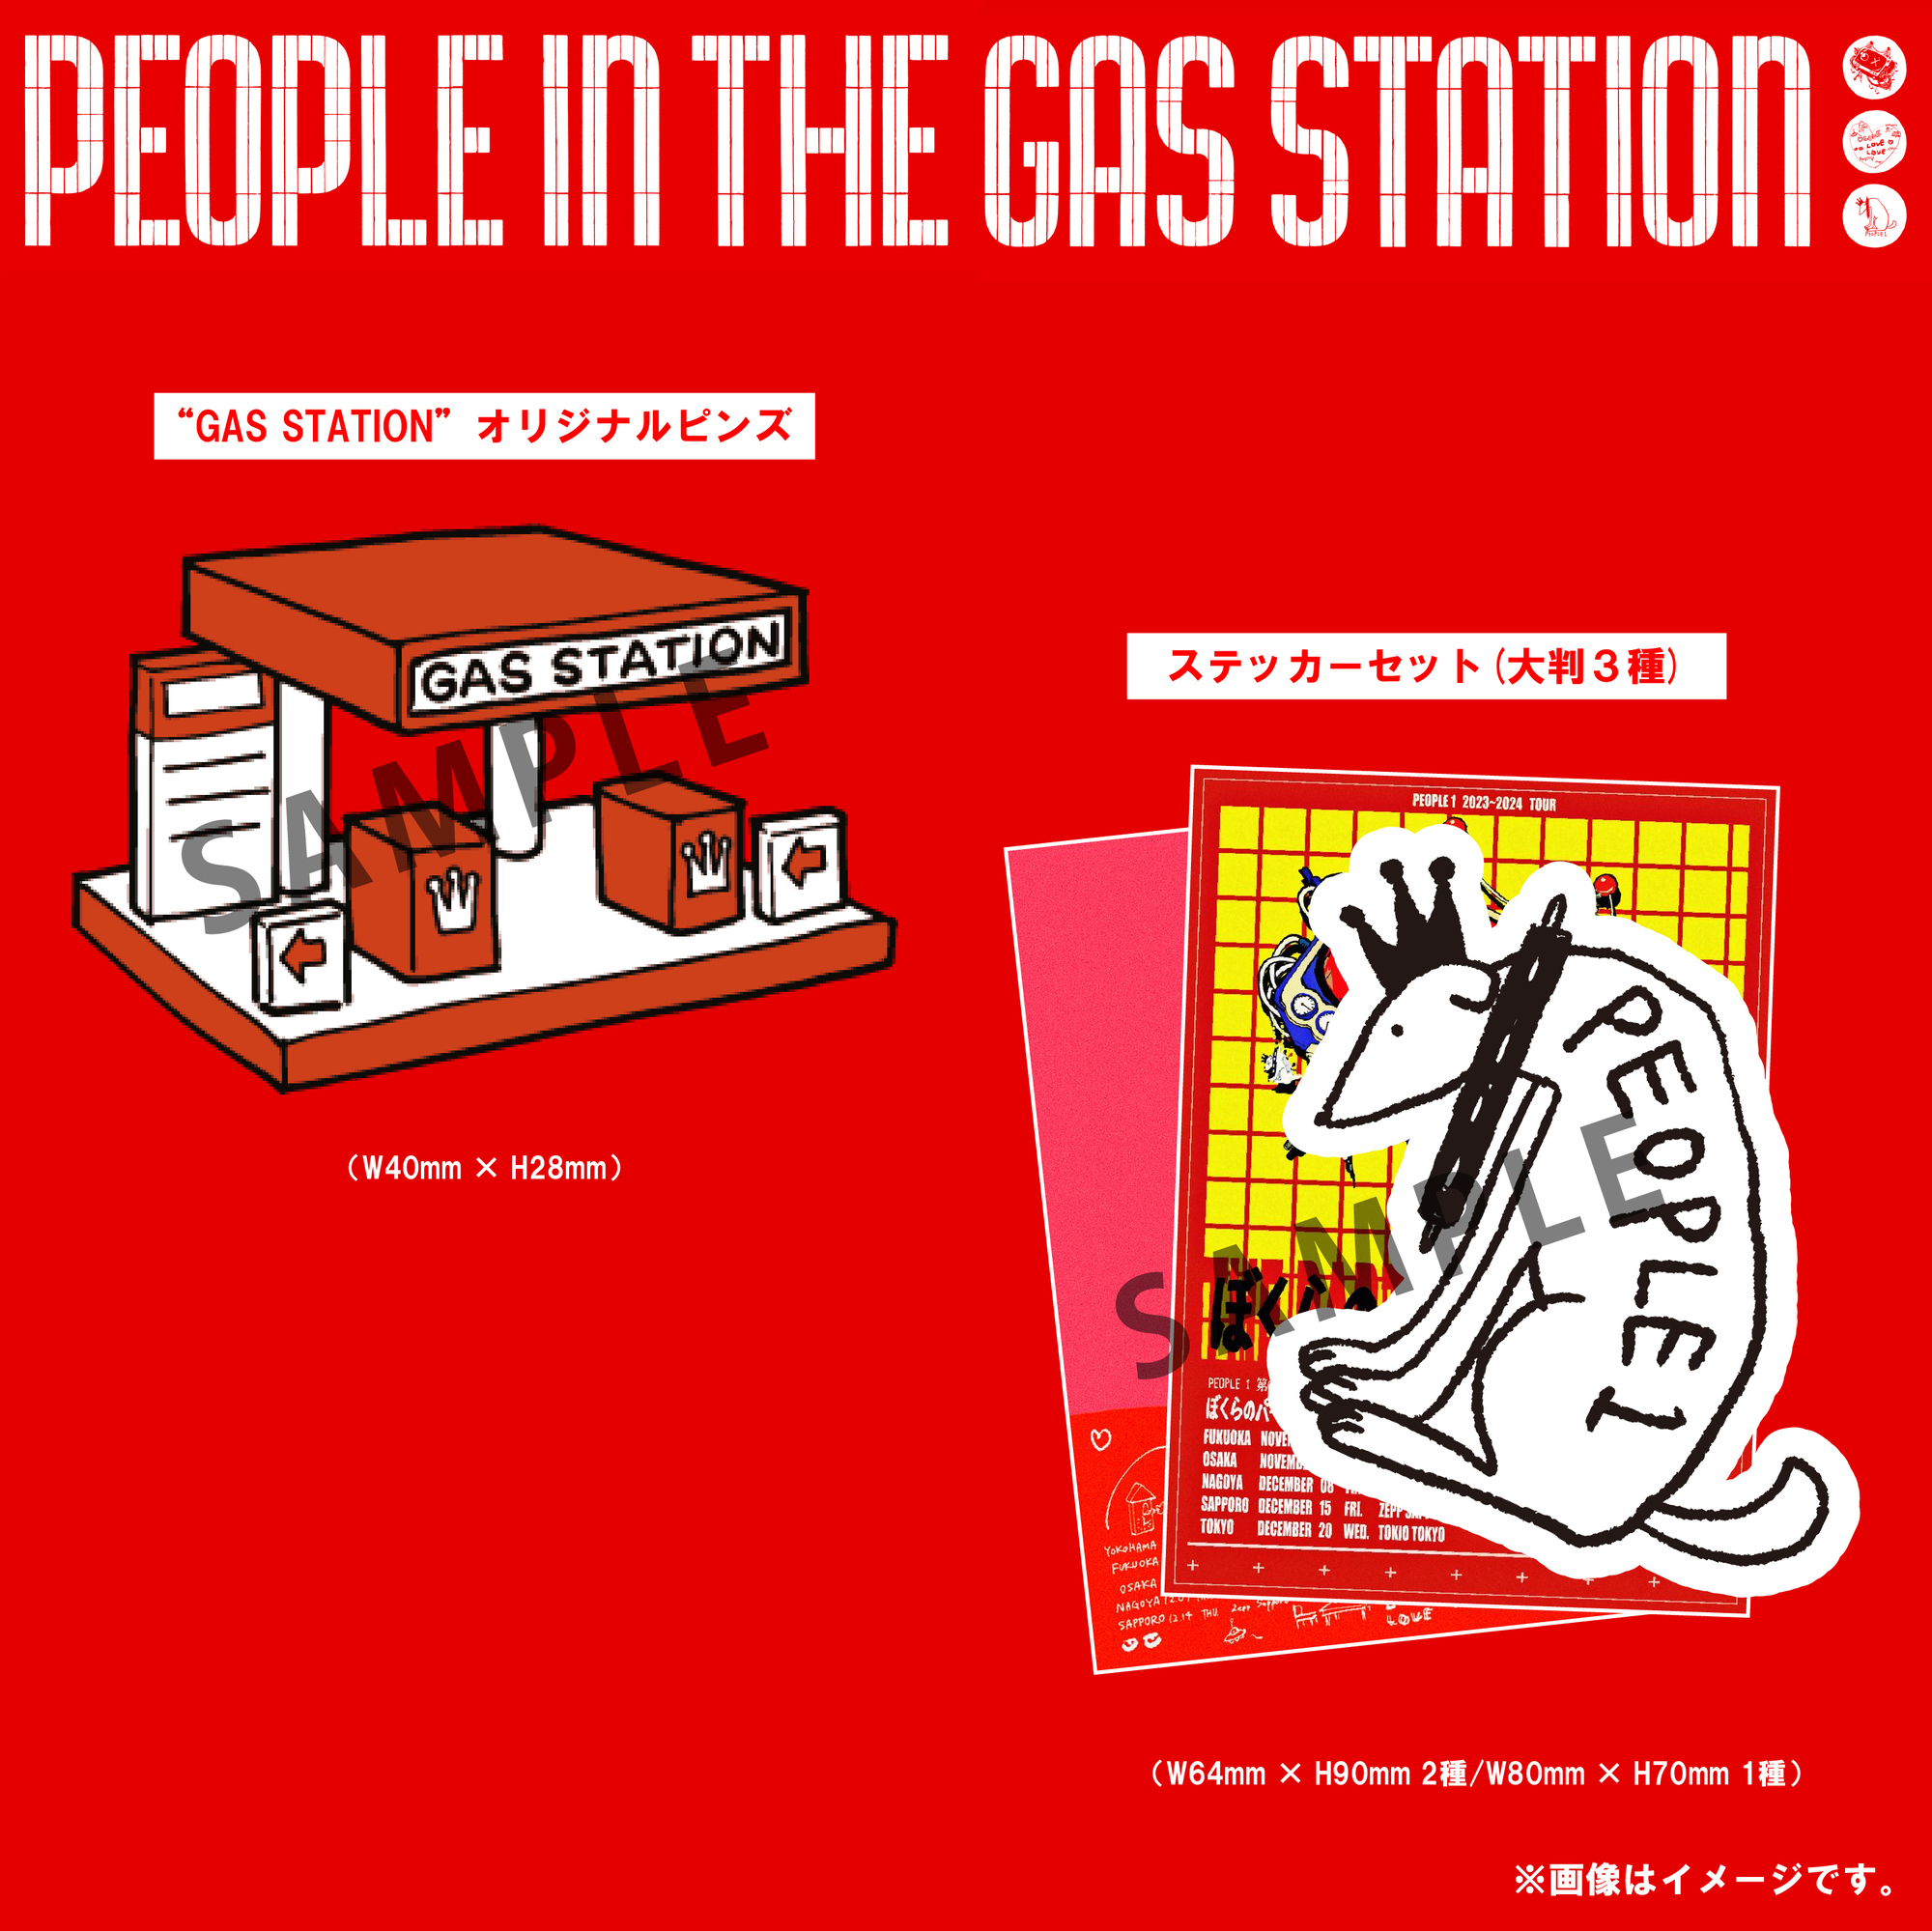 6/5発売 完全生産限定Blu-ray「PEOPLE IN THE GAS STATION」収録内容 